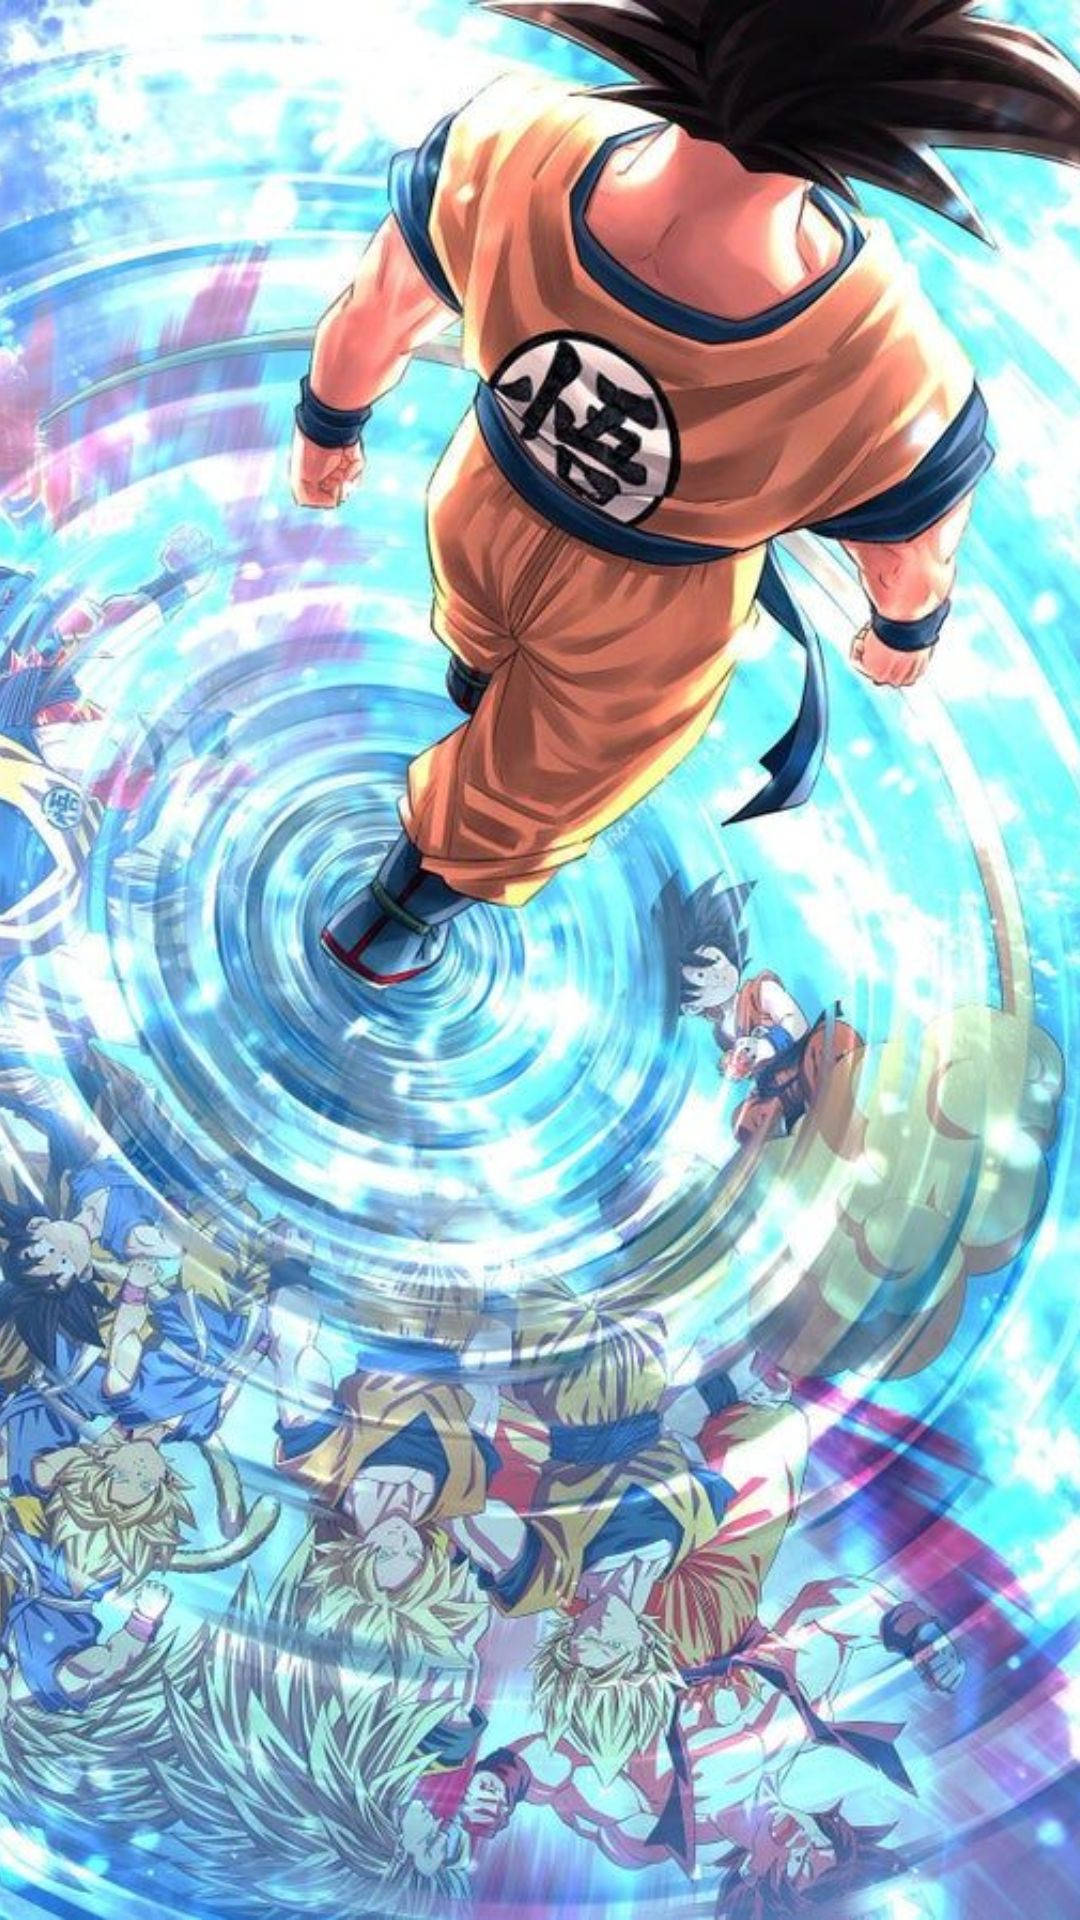 Caption: Epic Saiyan Battle Display - Dragon Ball Z Iphone Wallpaper Wallpaper